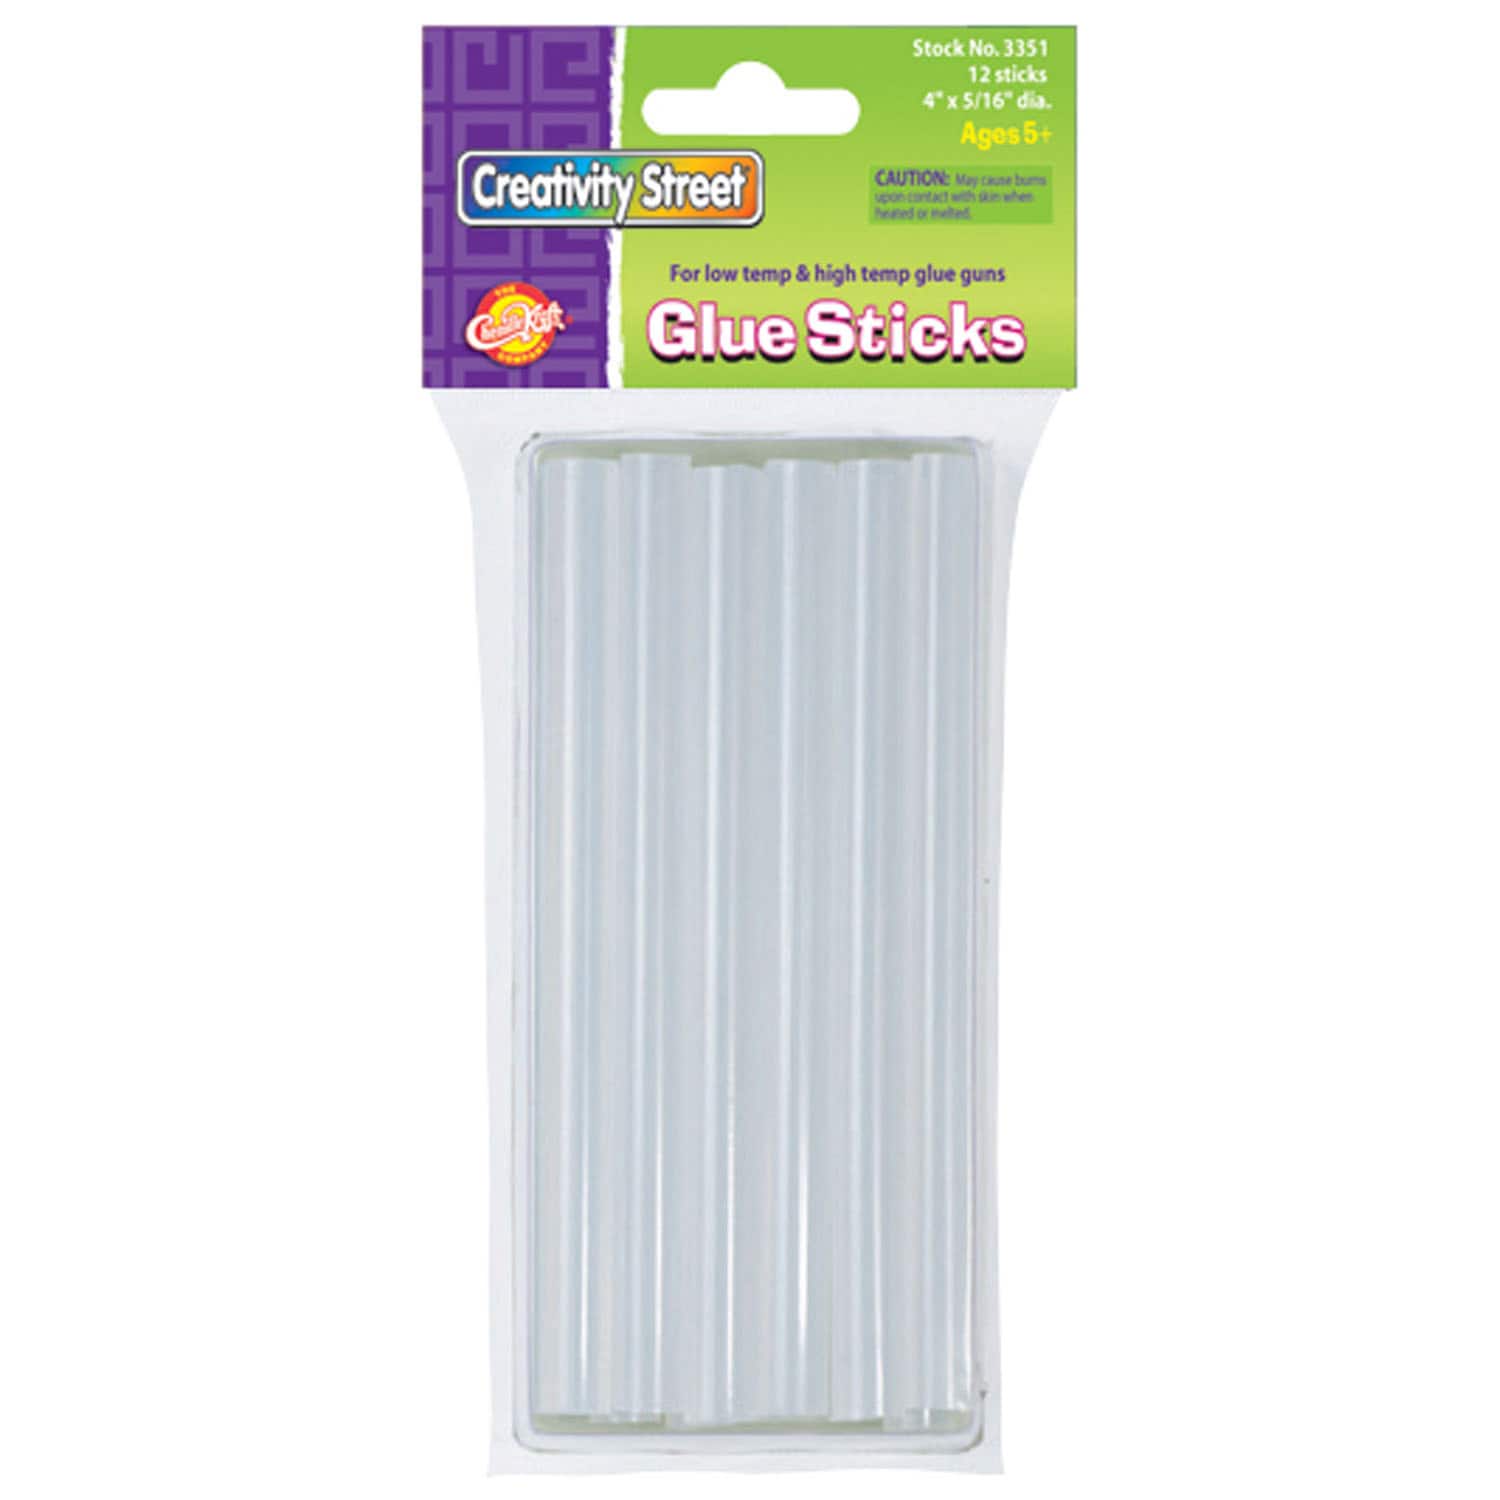 3 Packs: 12 Packs 12 ct. (432 total) Creativity Street&#xAE; Dual Temp Glue Stick Refills